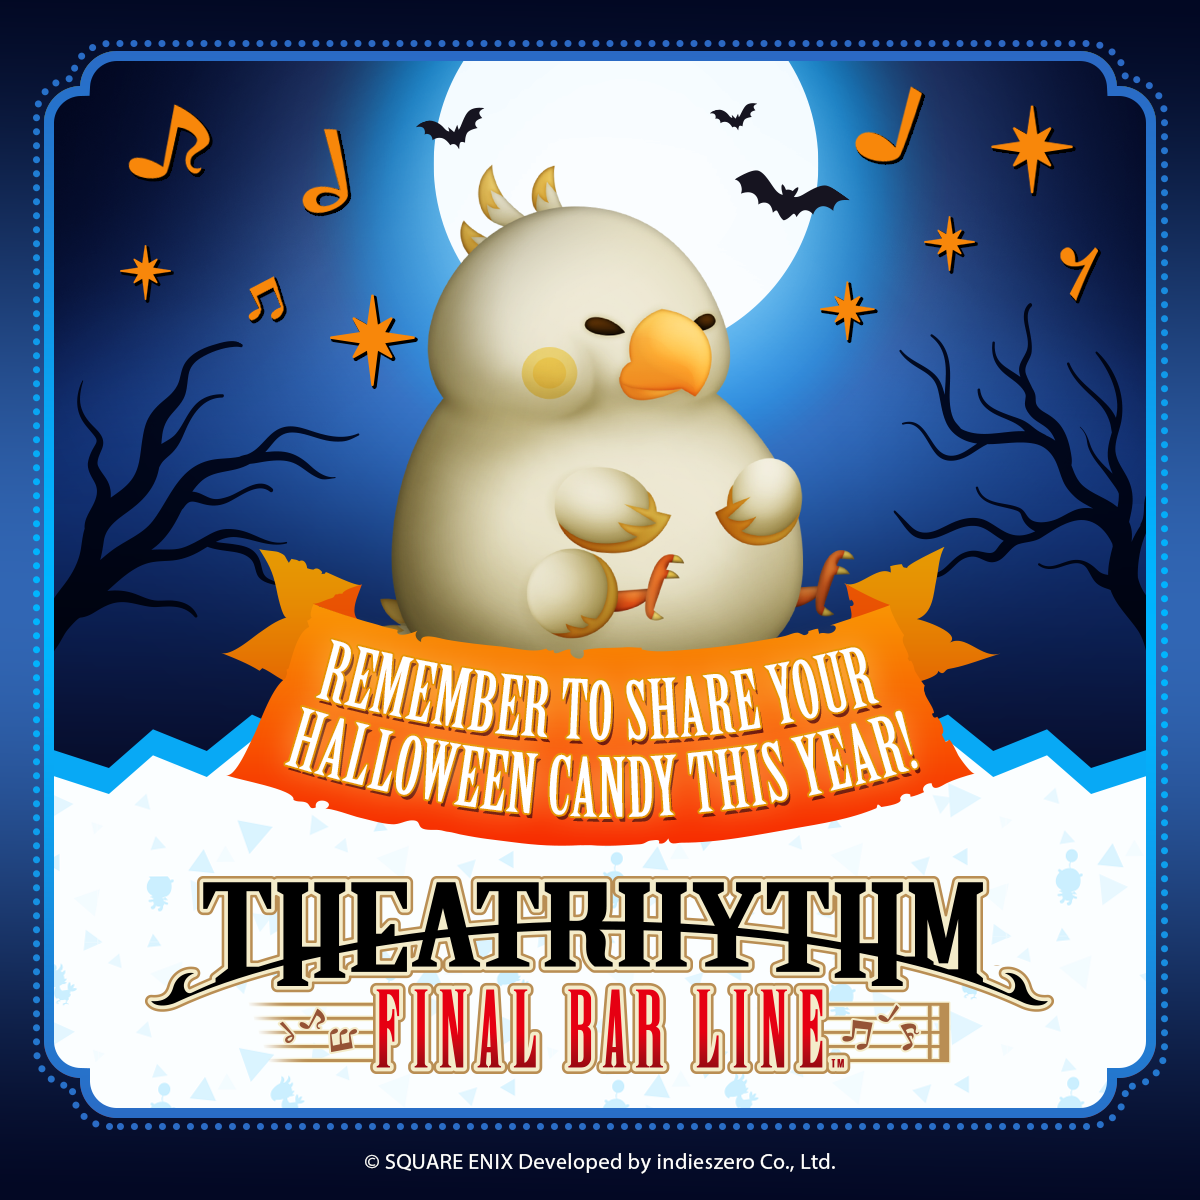 THEATRHYTHM FINAL BAR LINE Halloween Card